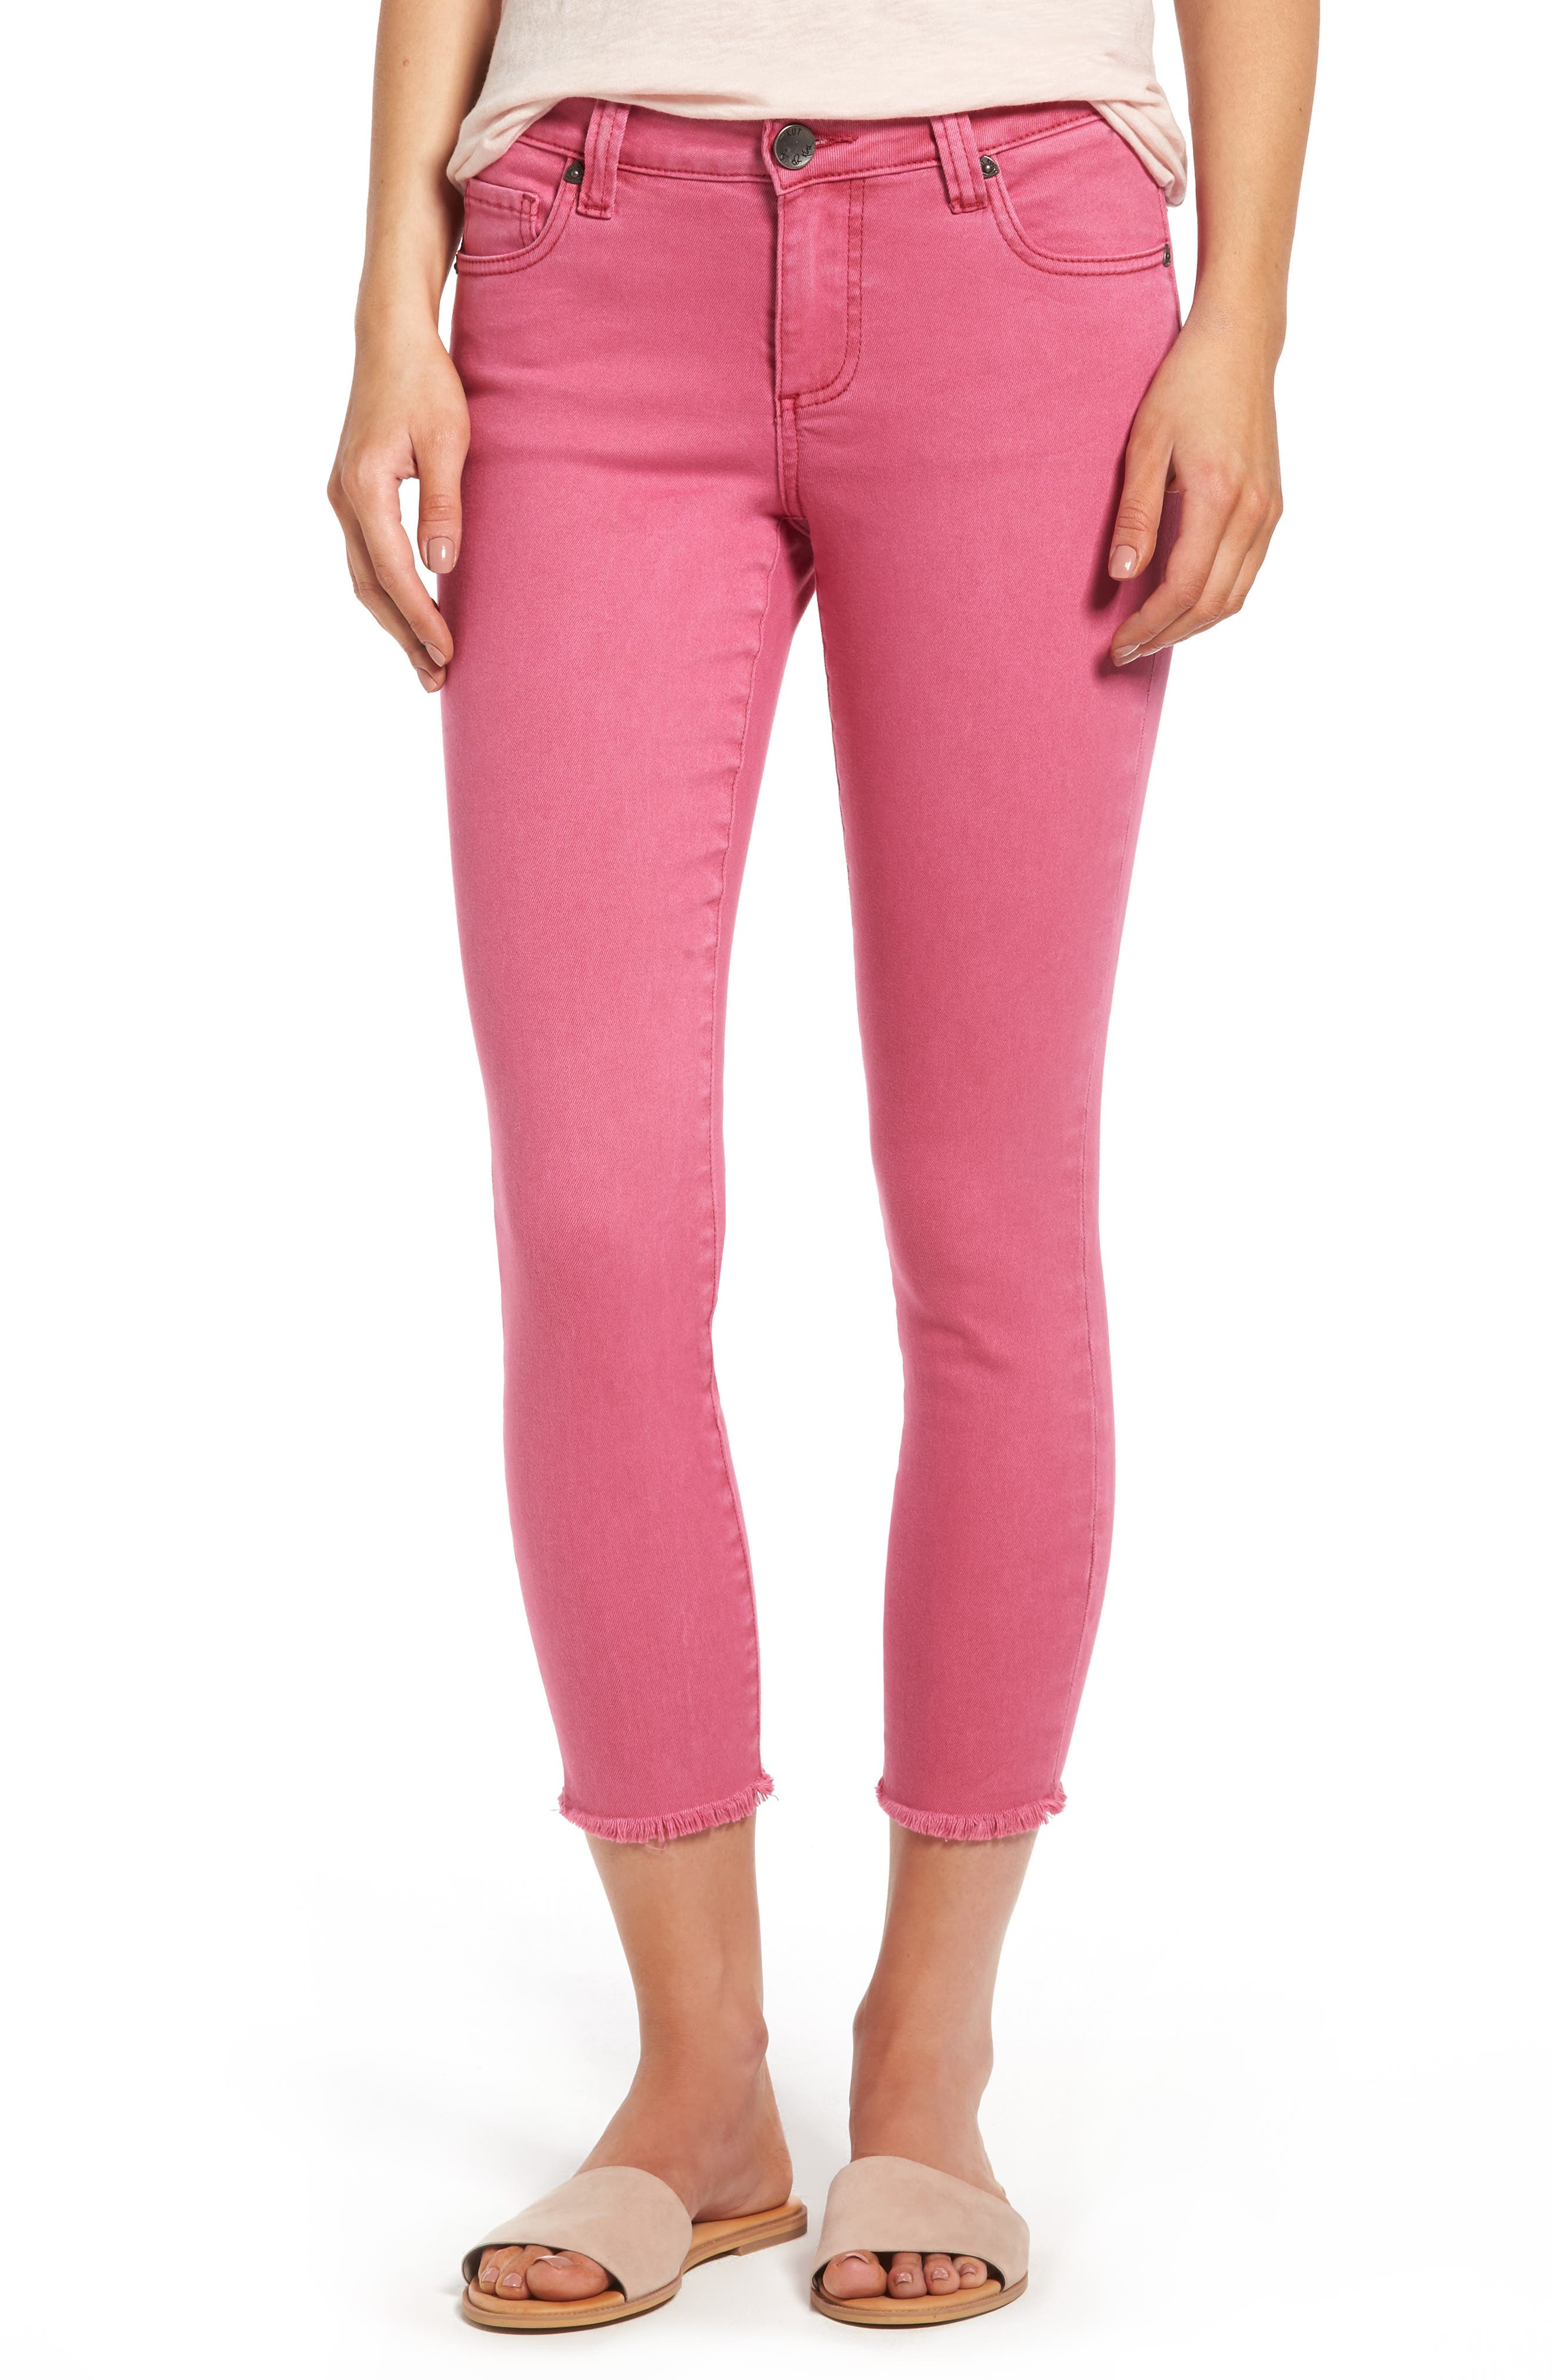 fuschia pink jeans